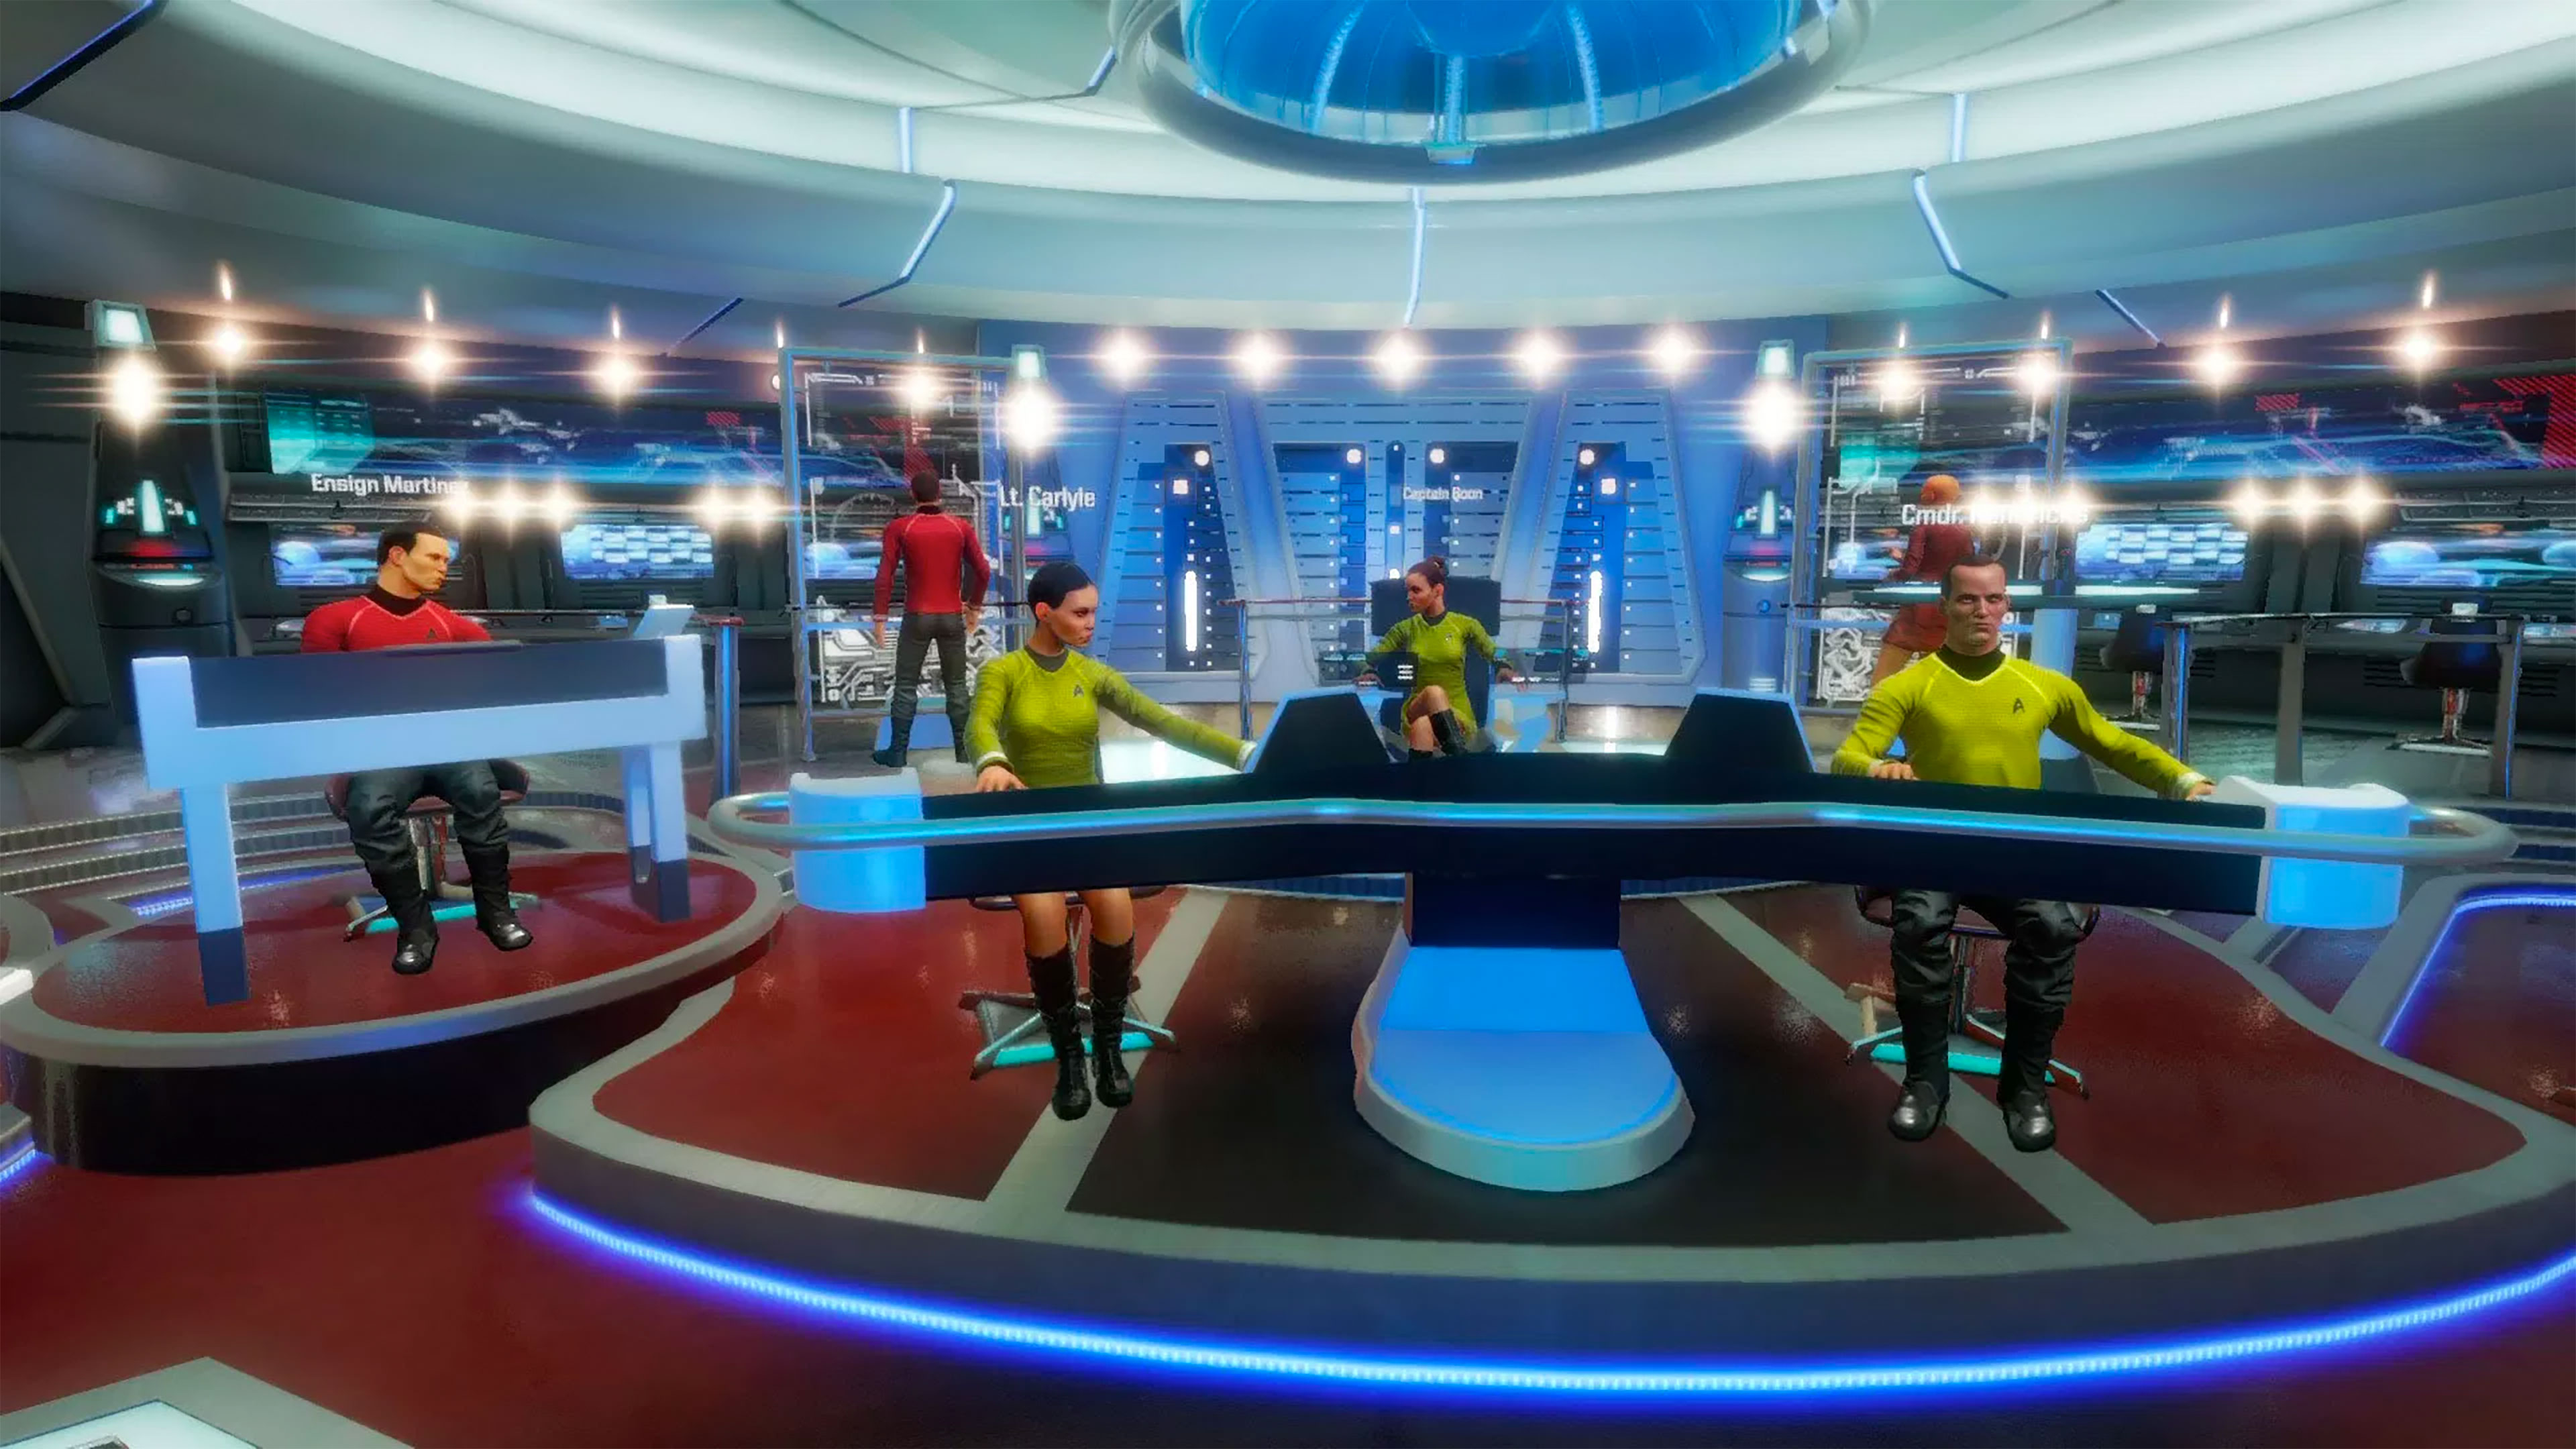 3840x2160 Star Trek: Bridge Crew Wallpapers in Ultra HD | 4K Gameranx